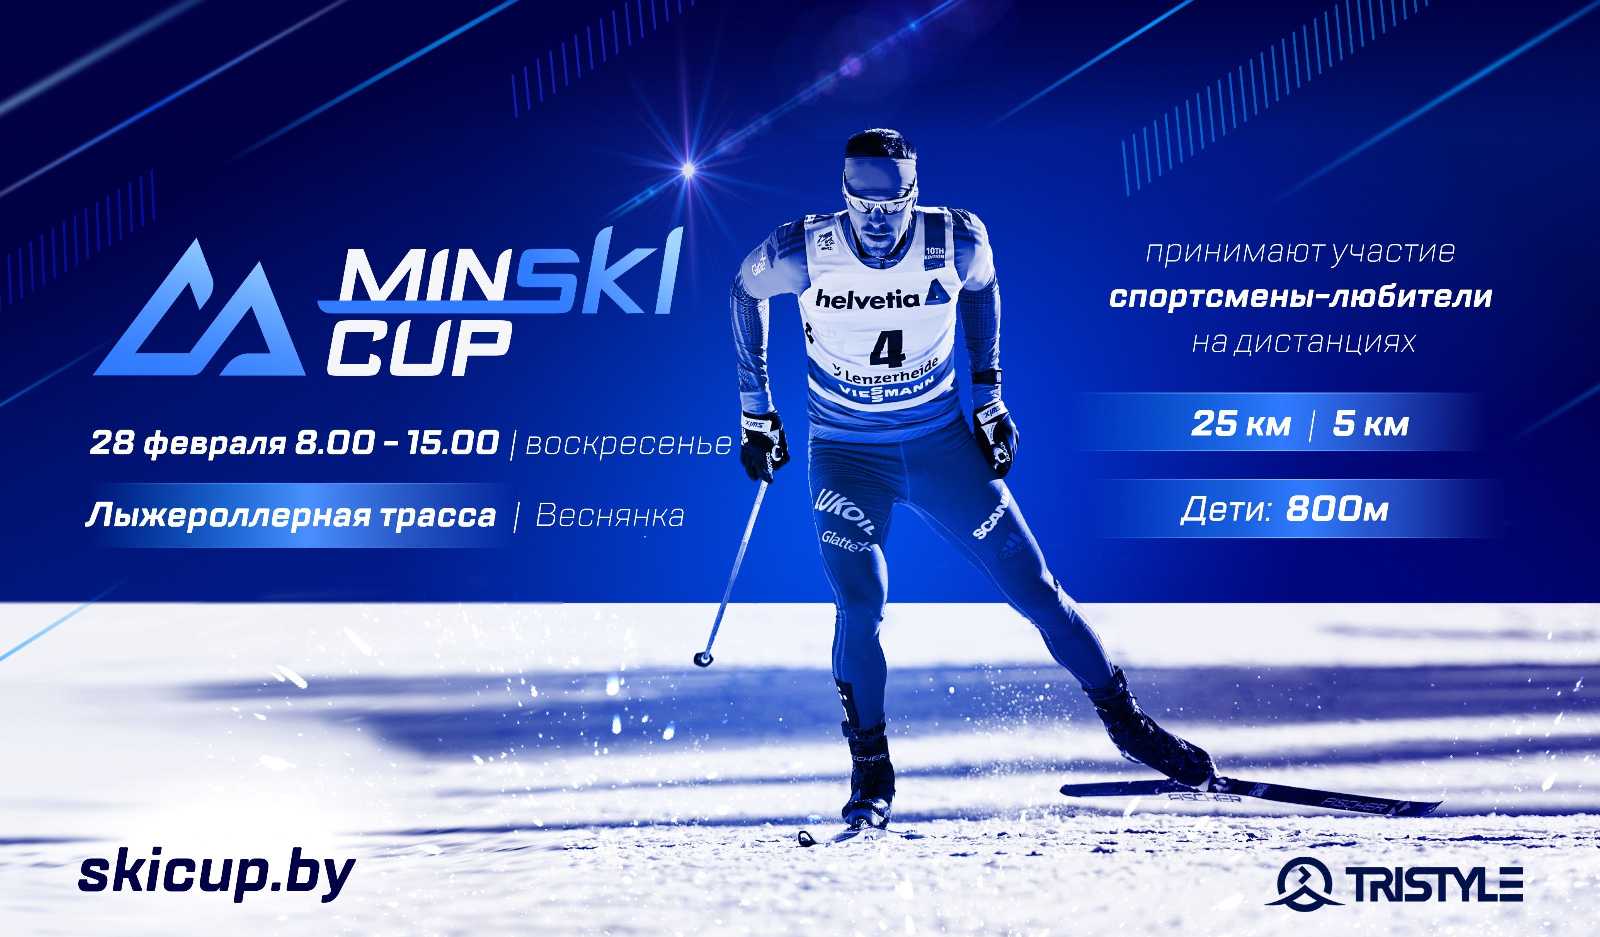 Minsk ski Cup